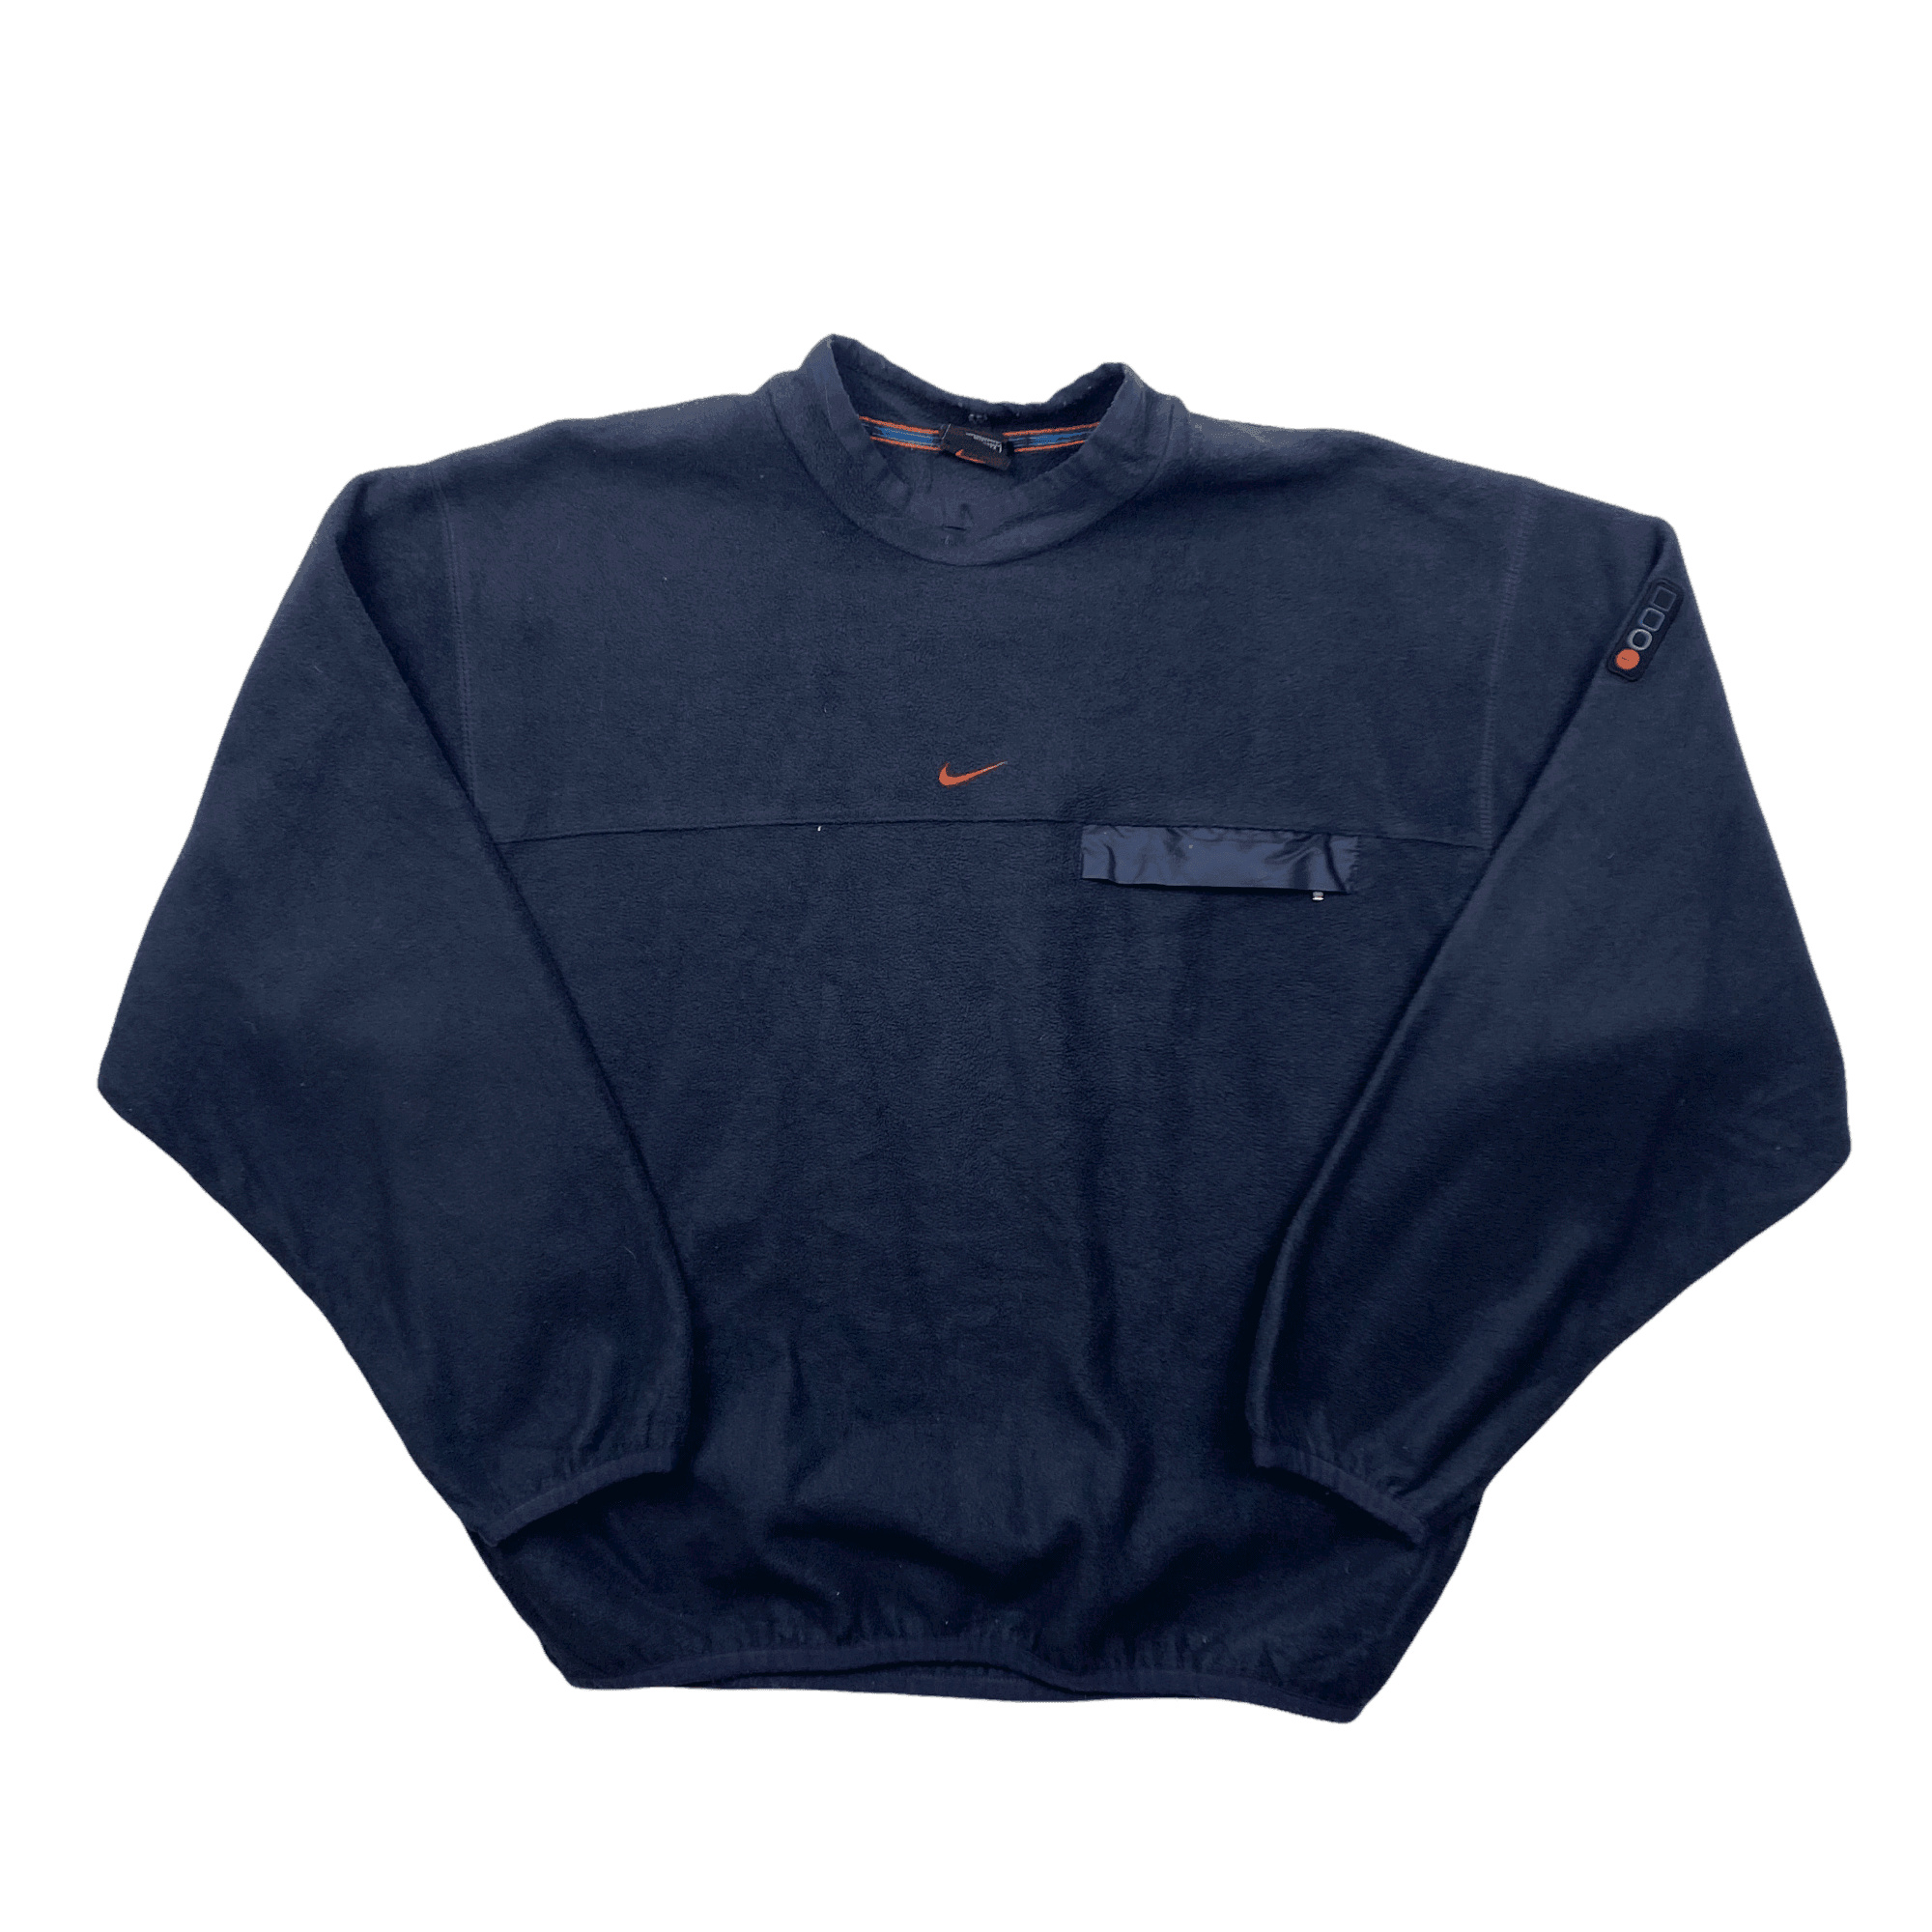 Vintage 90s Navy Blue Nike Centre Swoosh Fleece Sweatshirt - Medium - The Streetwear Studio